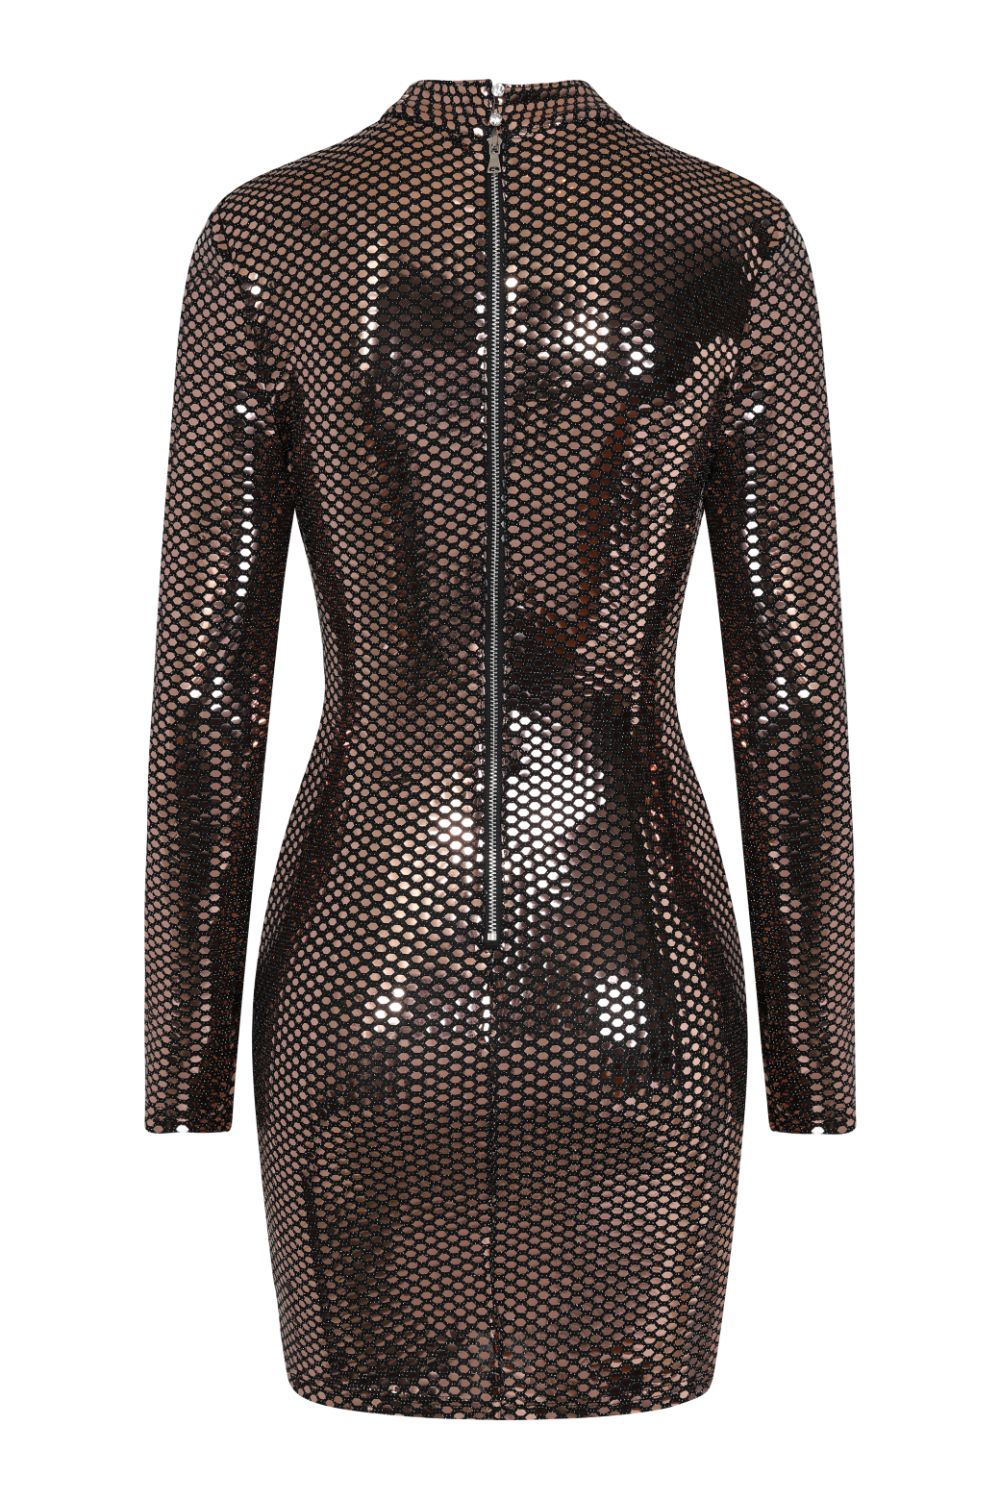 Hypnotised Bronze Metallic Mirrored Sequin Bodycon Dress